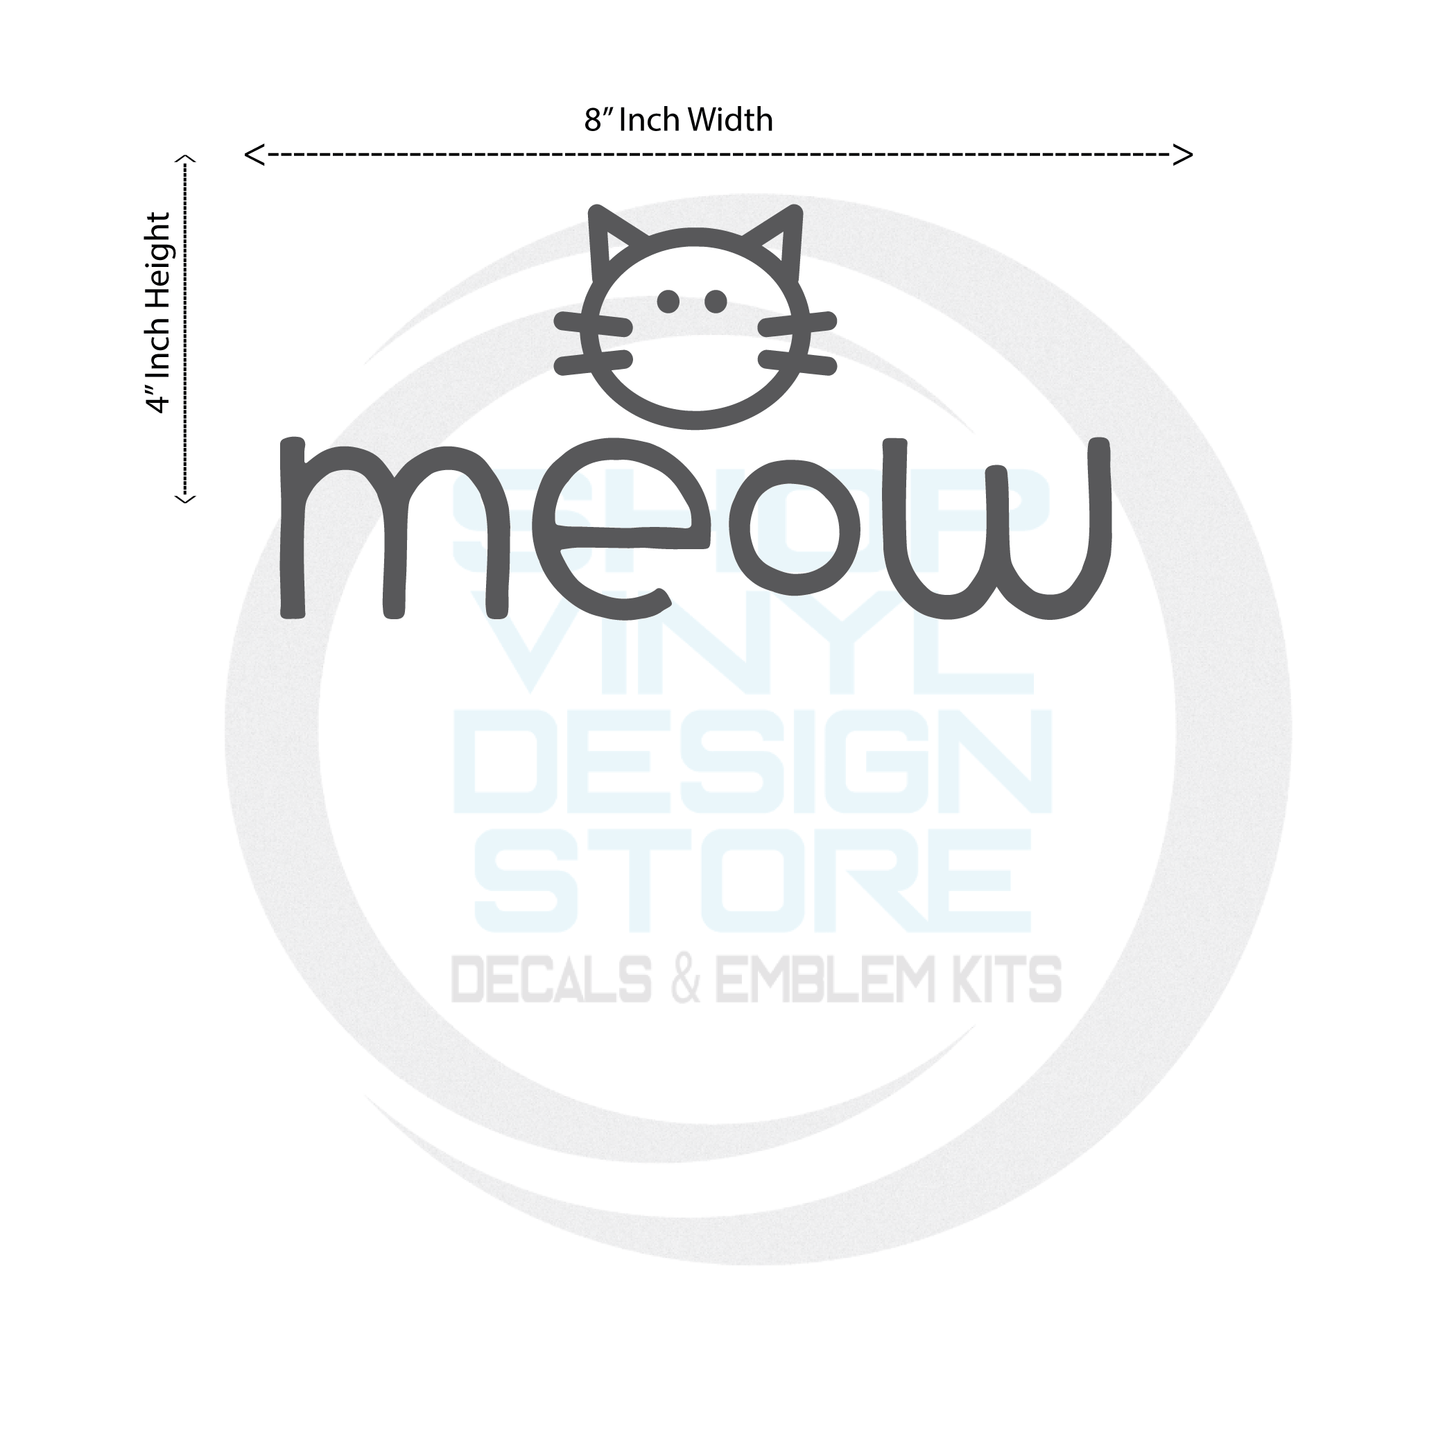 ShopVinylDesignStore.com Meow for Cat Treats Jar Wide 8"W x 4"H Shop Vinyl Design decals stickers